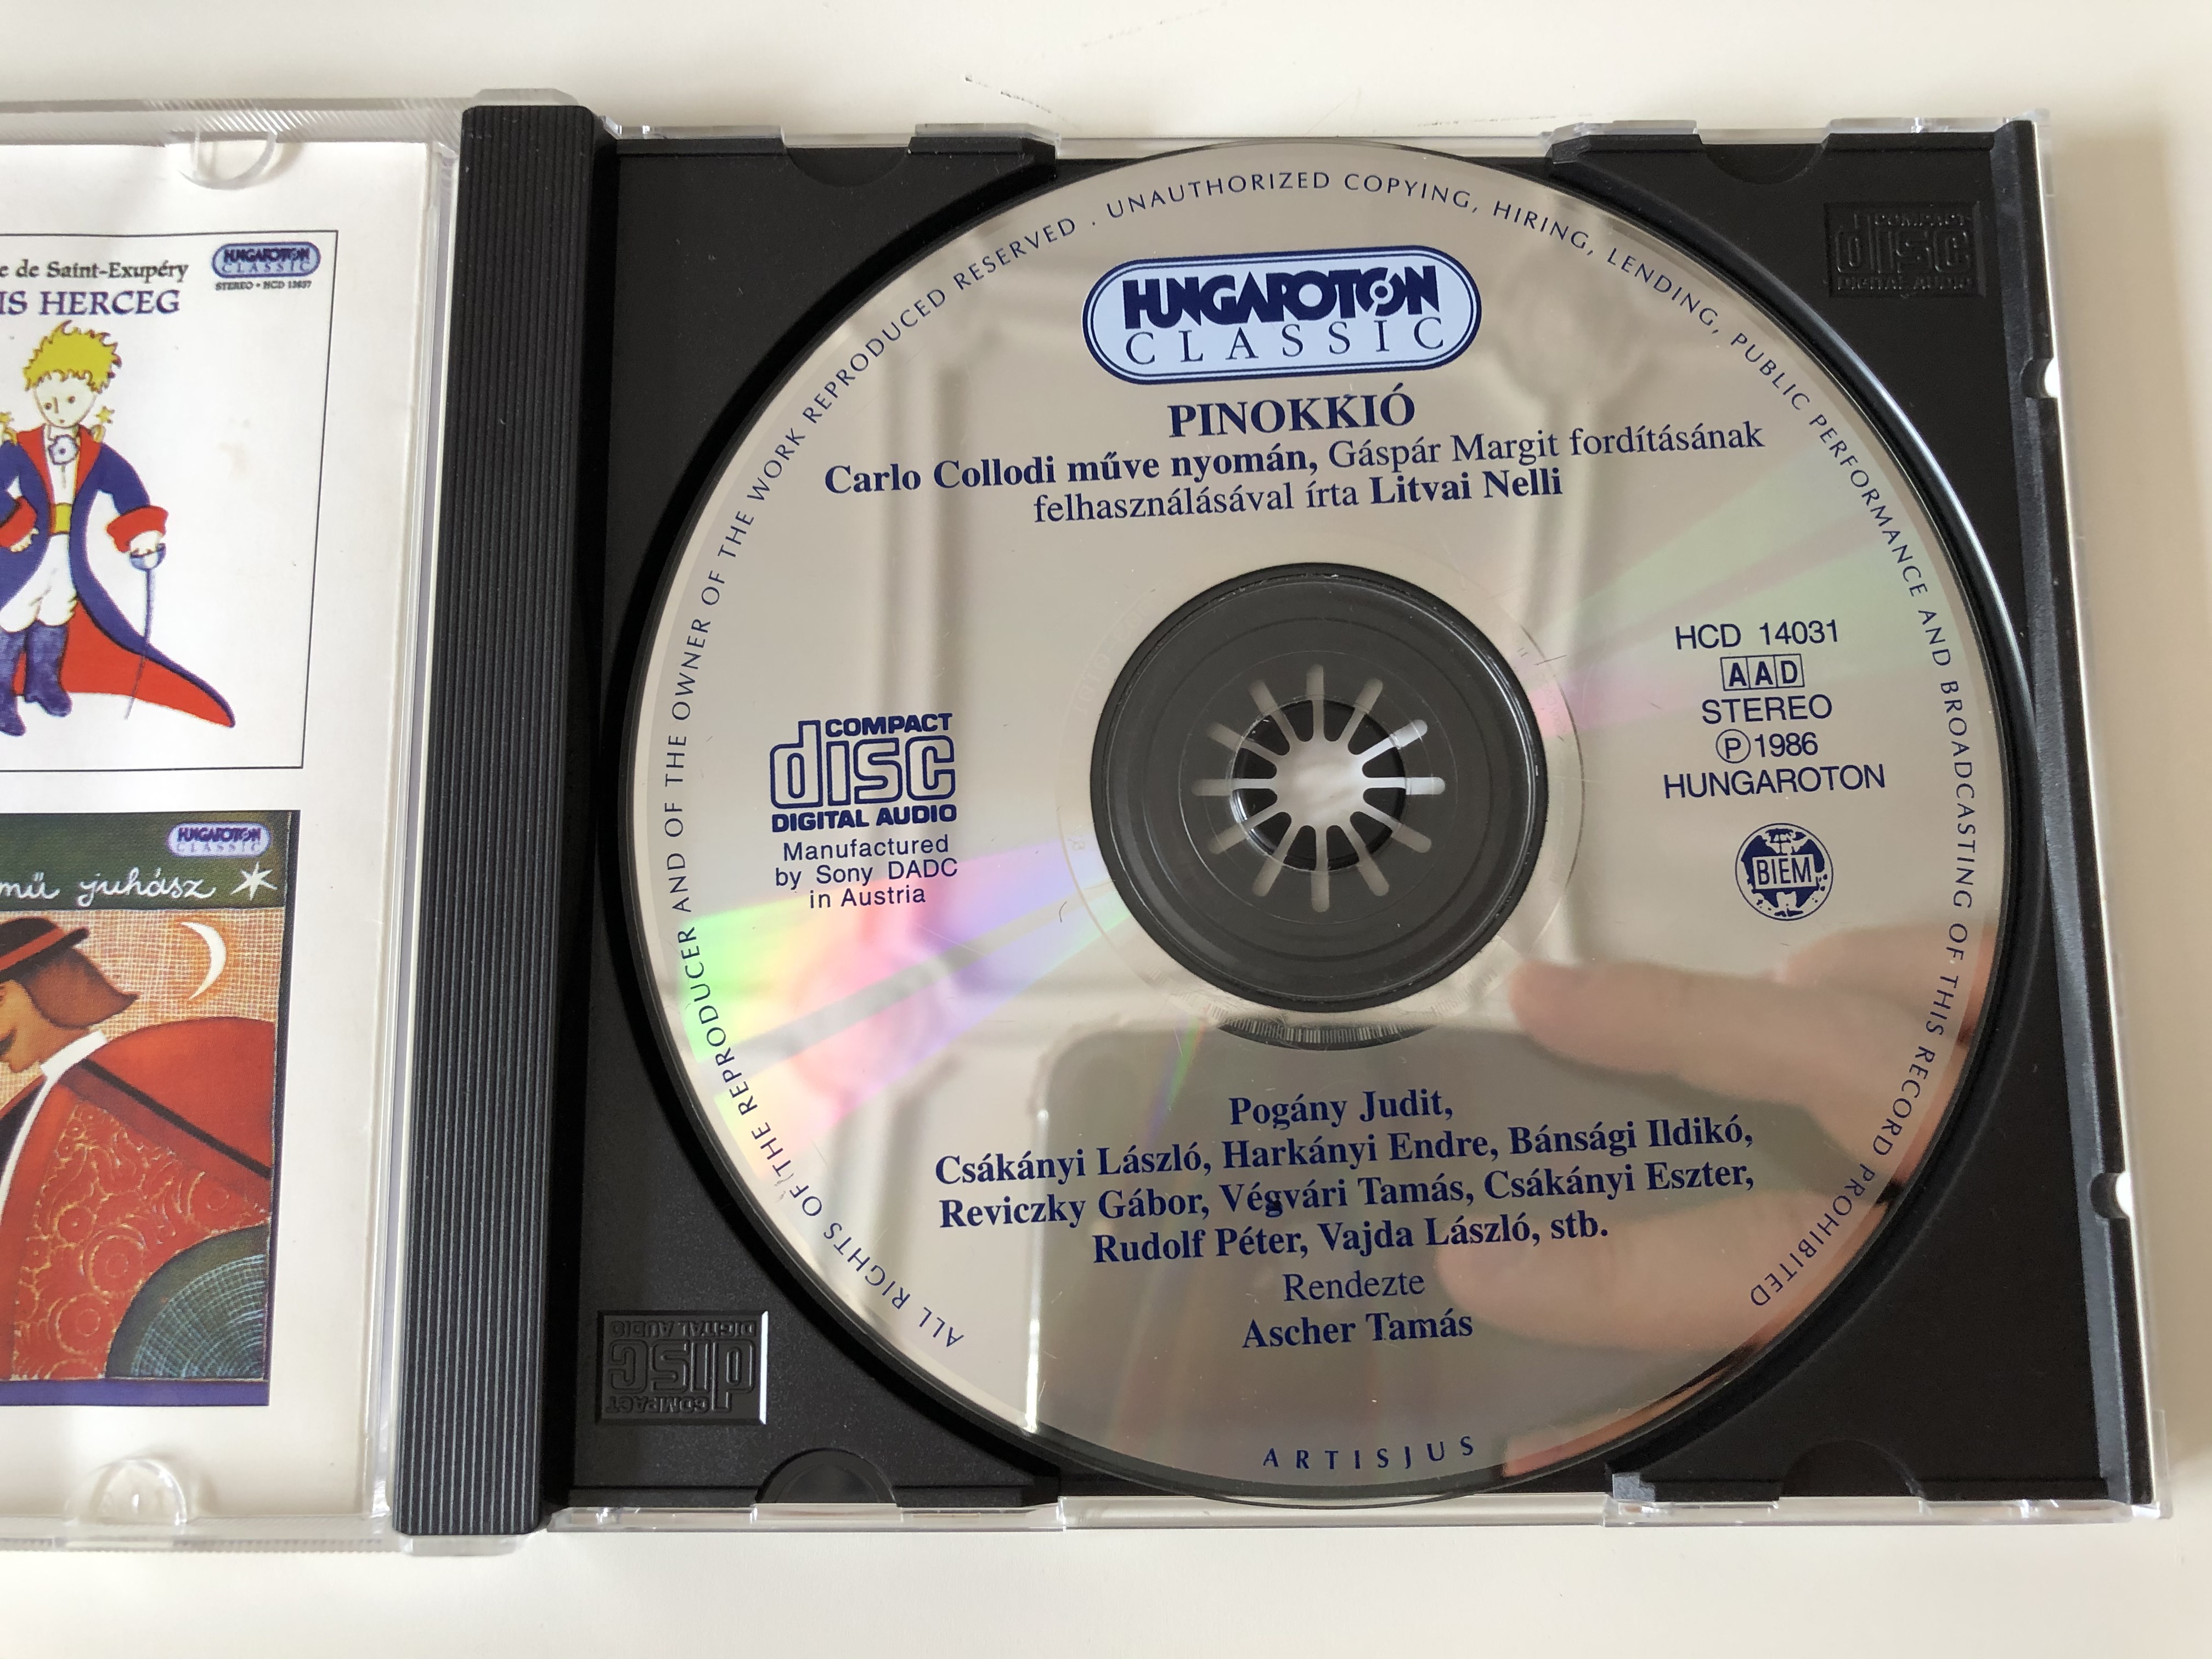 pinokkio-hungaroton-classic-audio-cd-2000-stereo-hcd-14031-4-.jpg